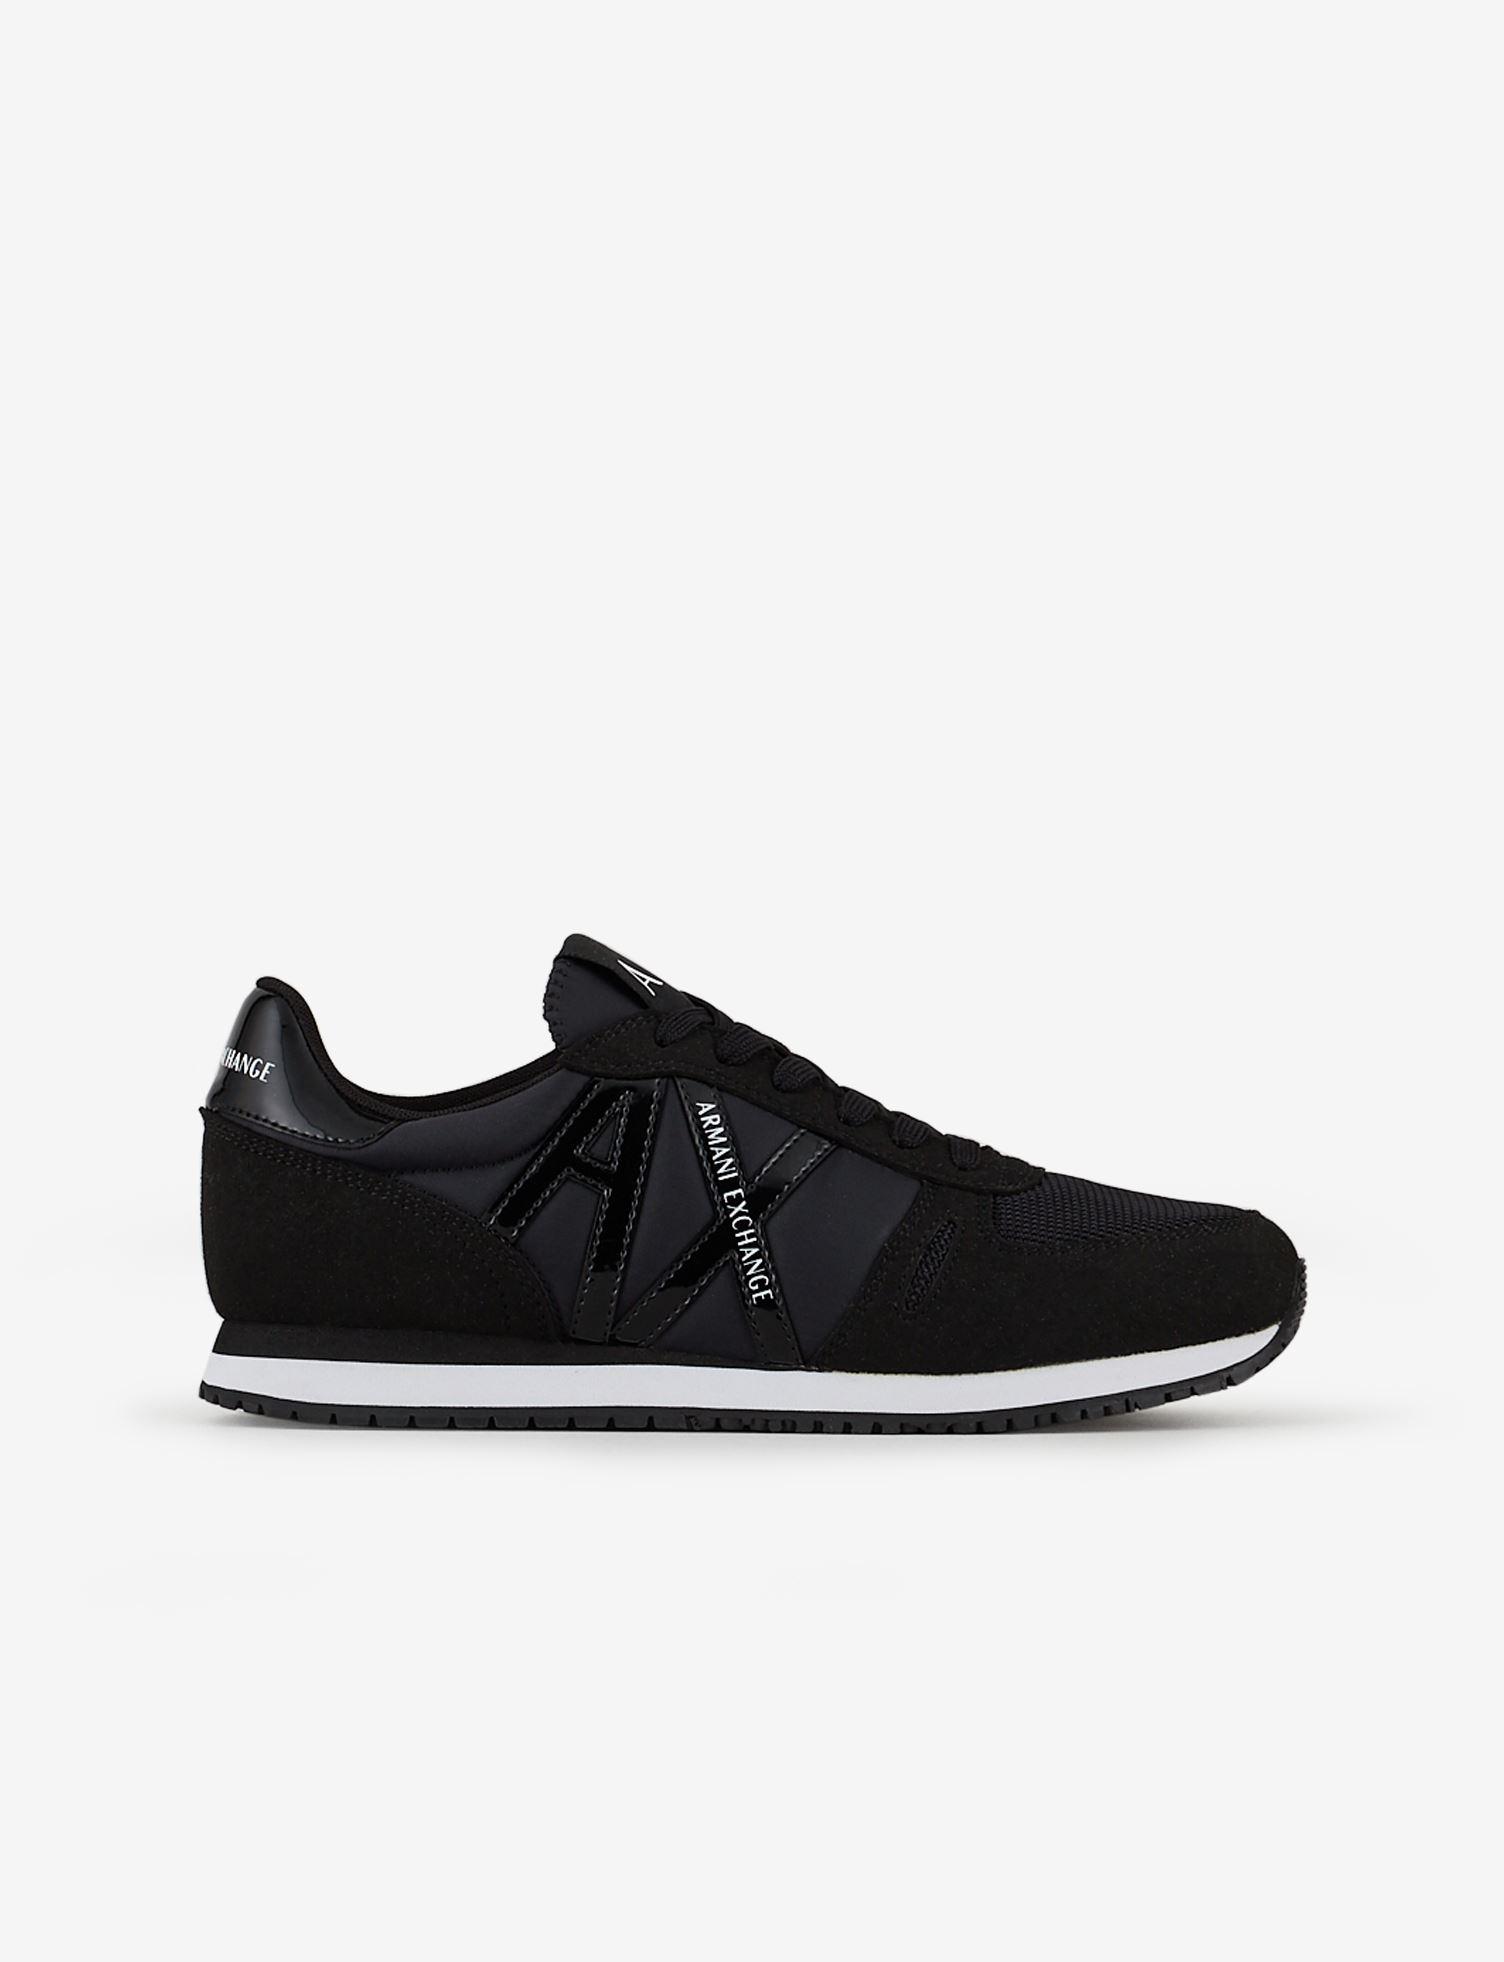 Buy AFROJACK Men Casual Black Sneakers Shoe - m262 at Amazon.in